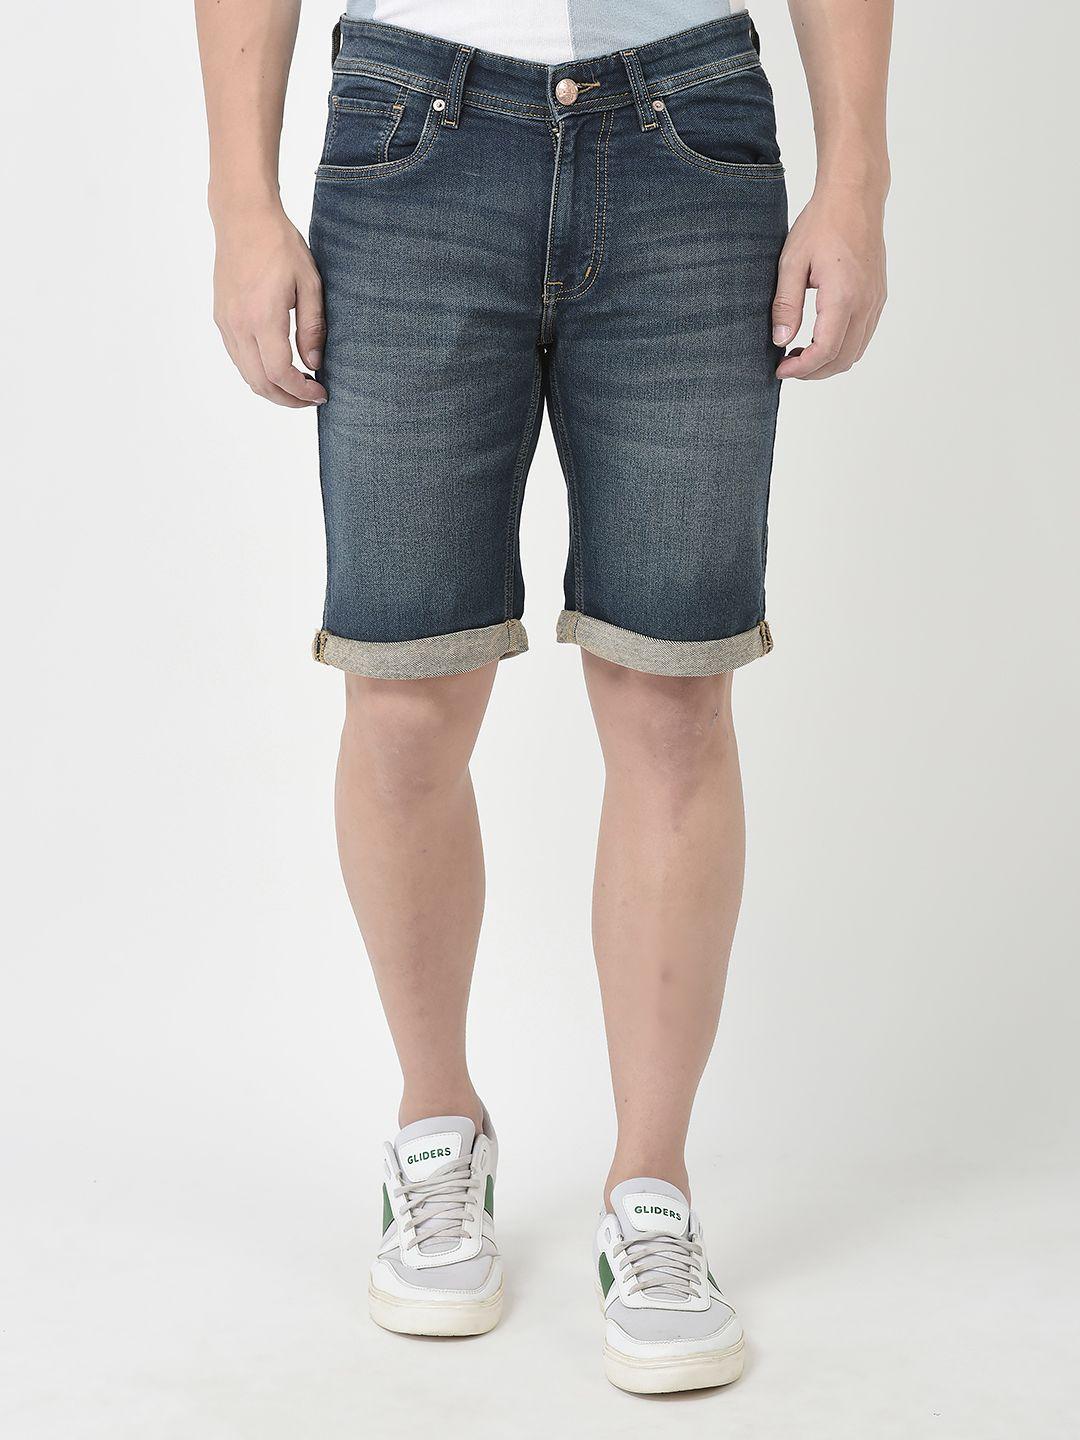 Buy Pepe Jeans White Skinny Fit Denim Shorts for Men's Online @ Tata CLiQ